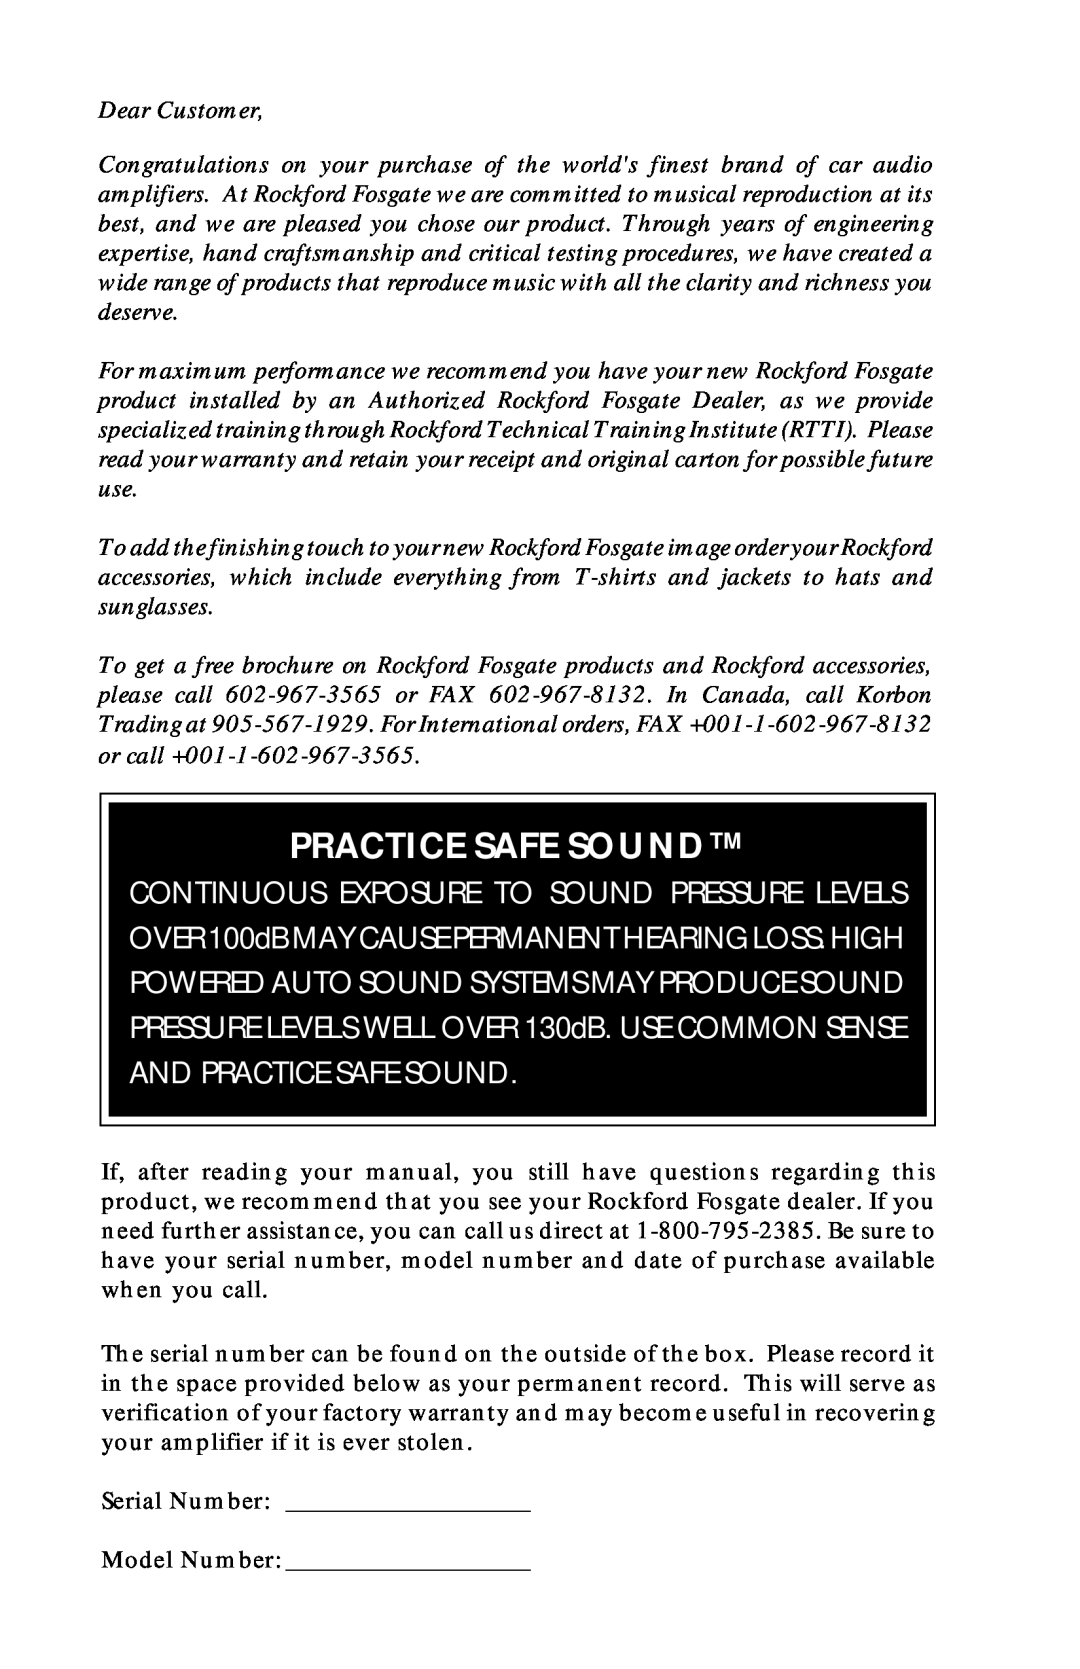 Rockford Fosgate PUNCH 4020 DSM manual Practice Safe Sound 